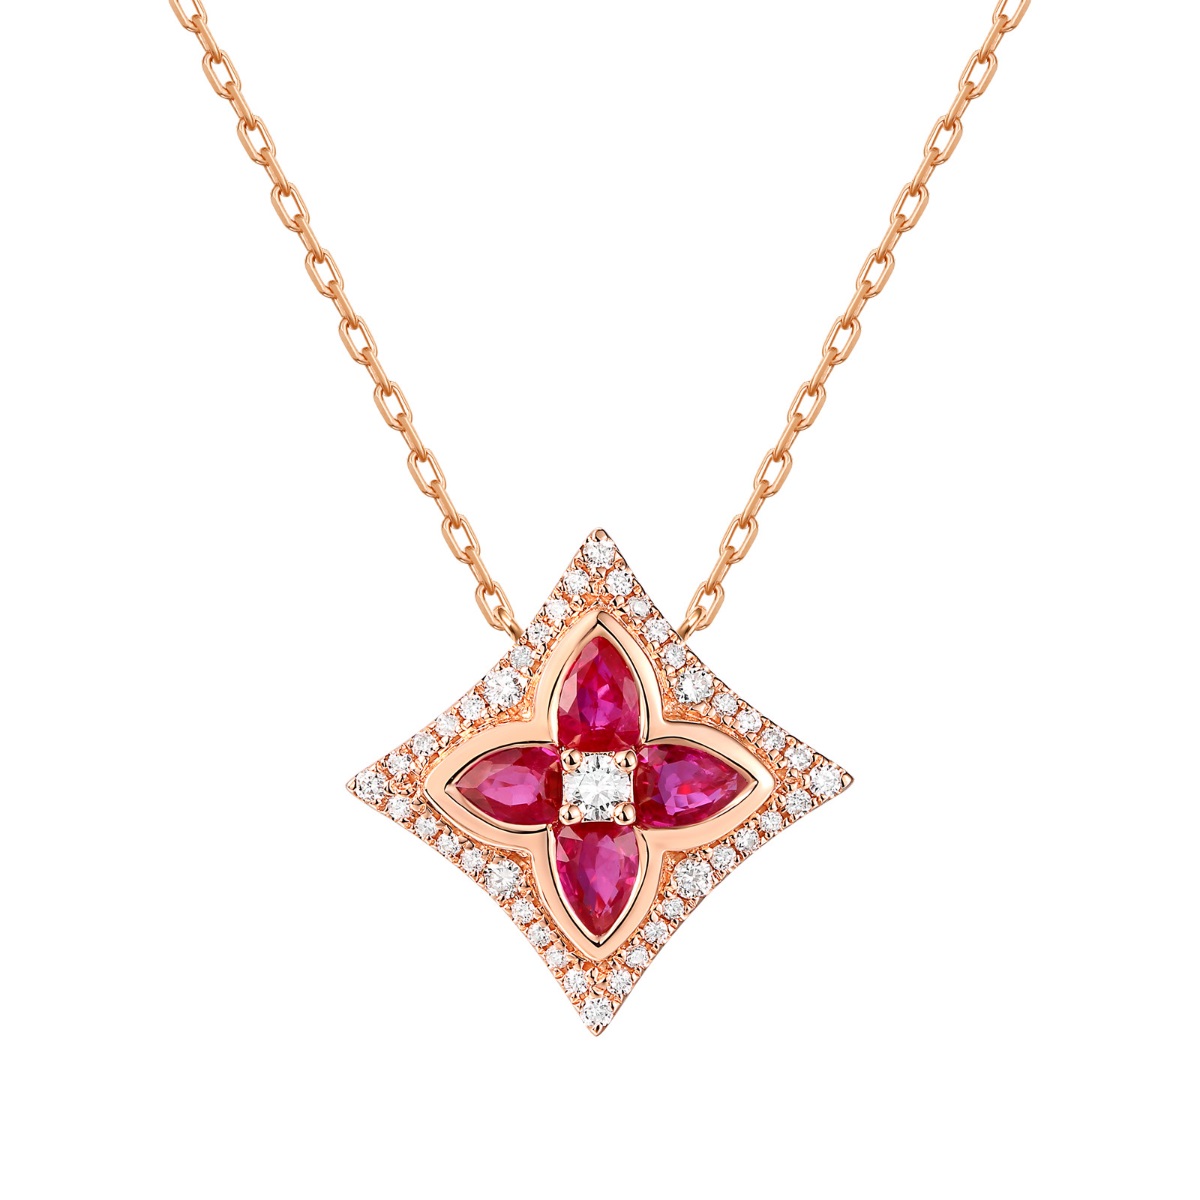 NL36381WRB – 18K Rose Gold  Diamond and Gemstone Necklace, 1.01 TCW